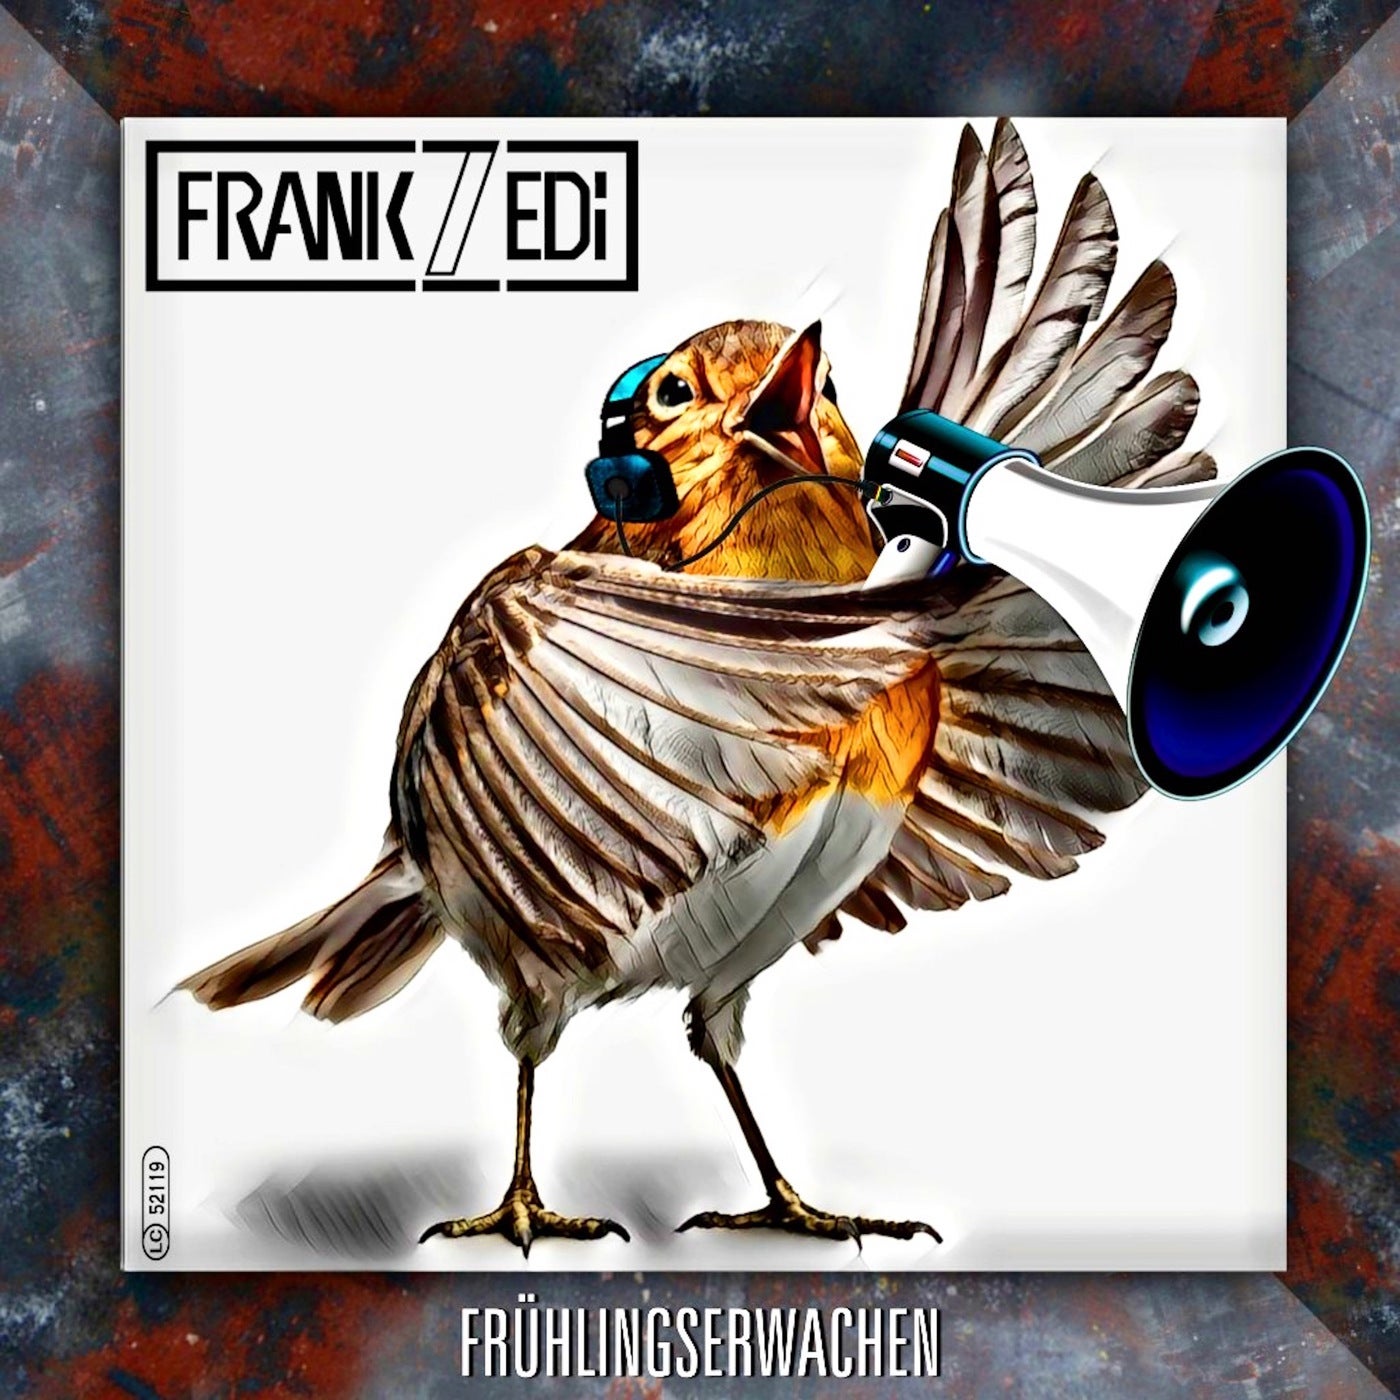 Frank Zedi – Frühlingserwachen [PTM0009]